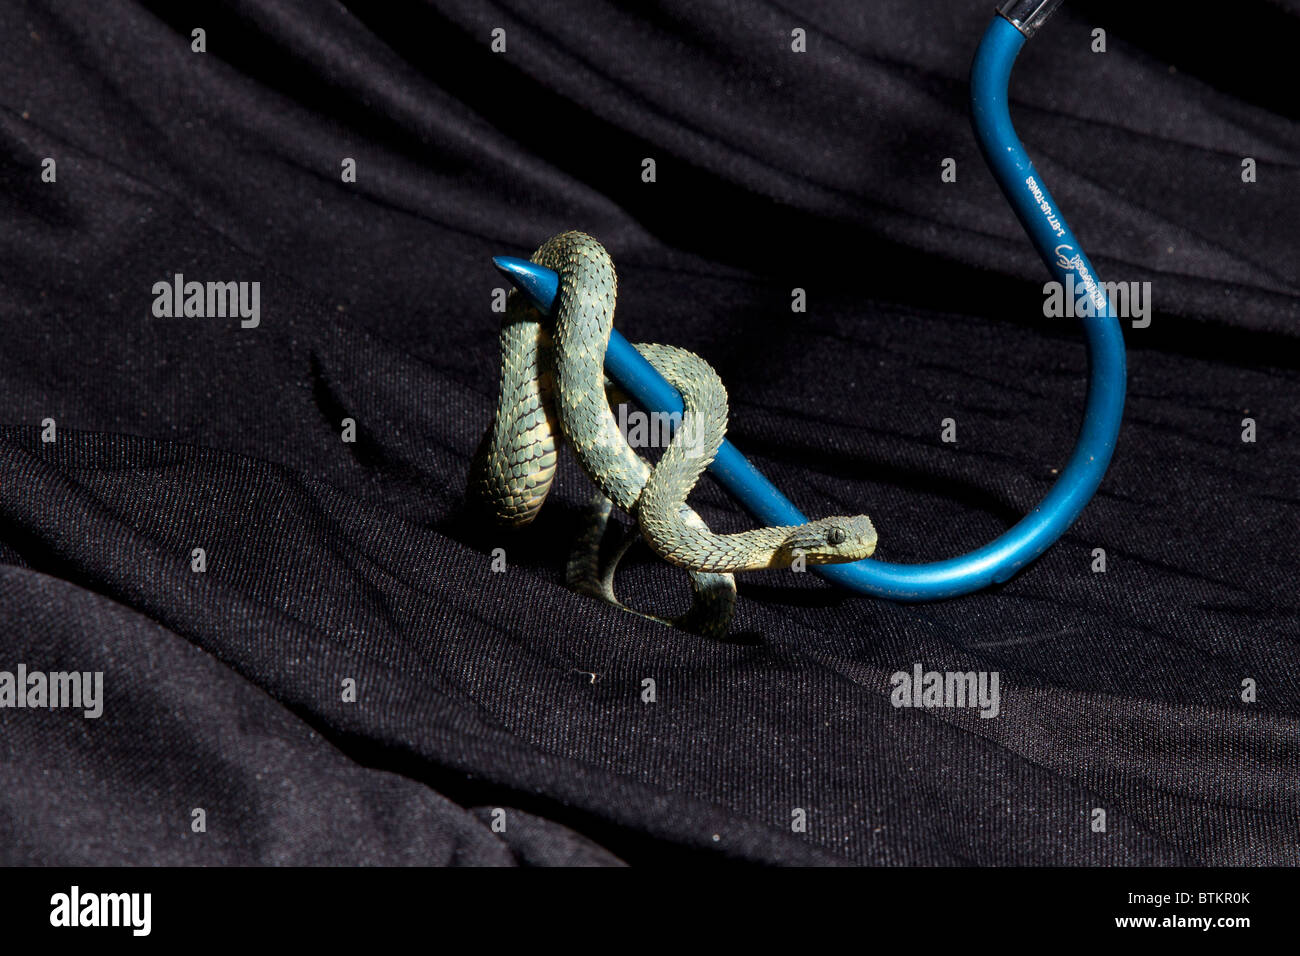 snake Variable Bush Viper Atheris squamigera Stock Photo - Alamy